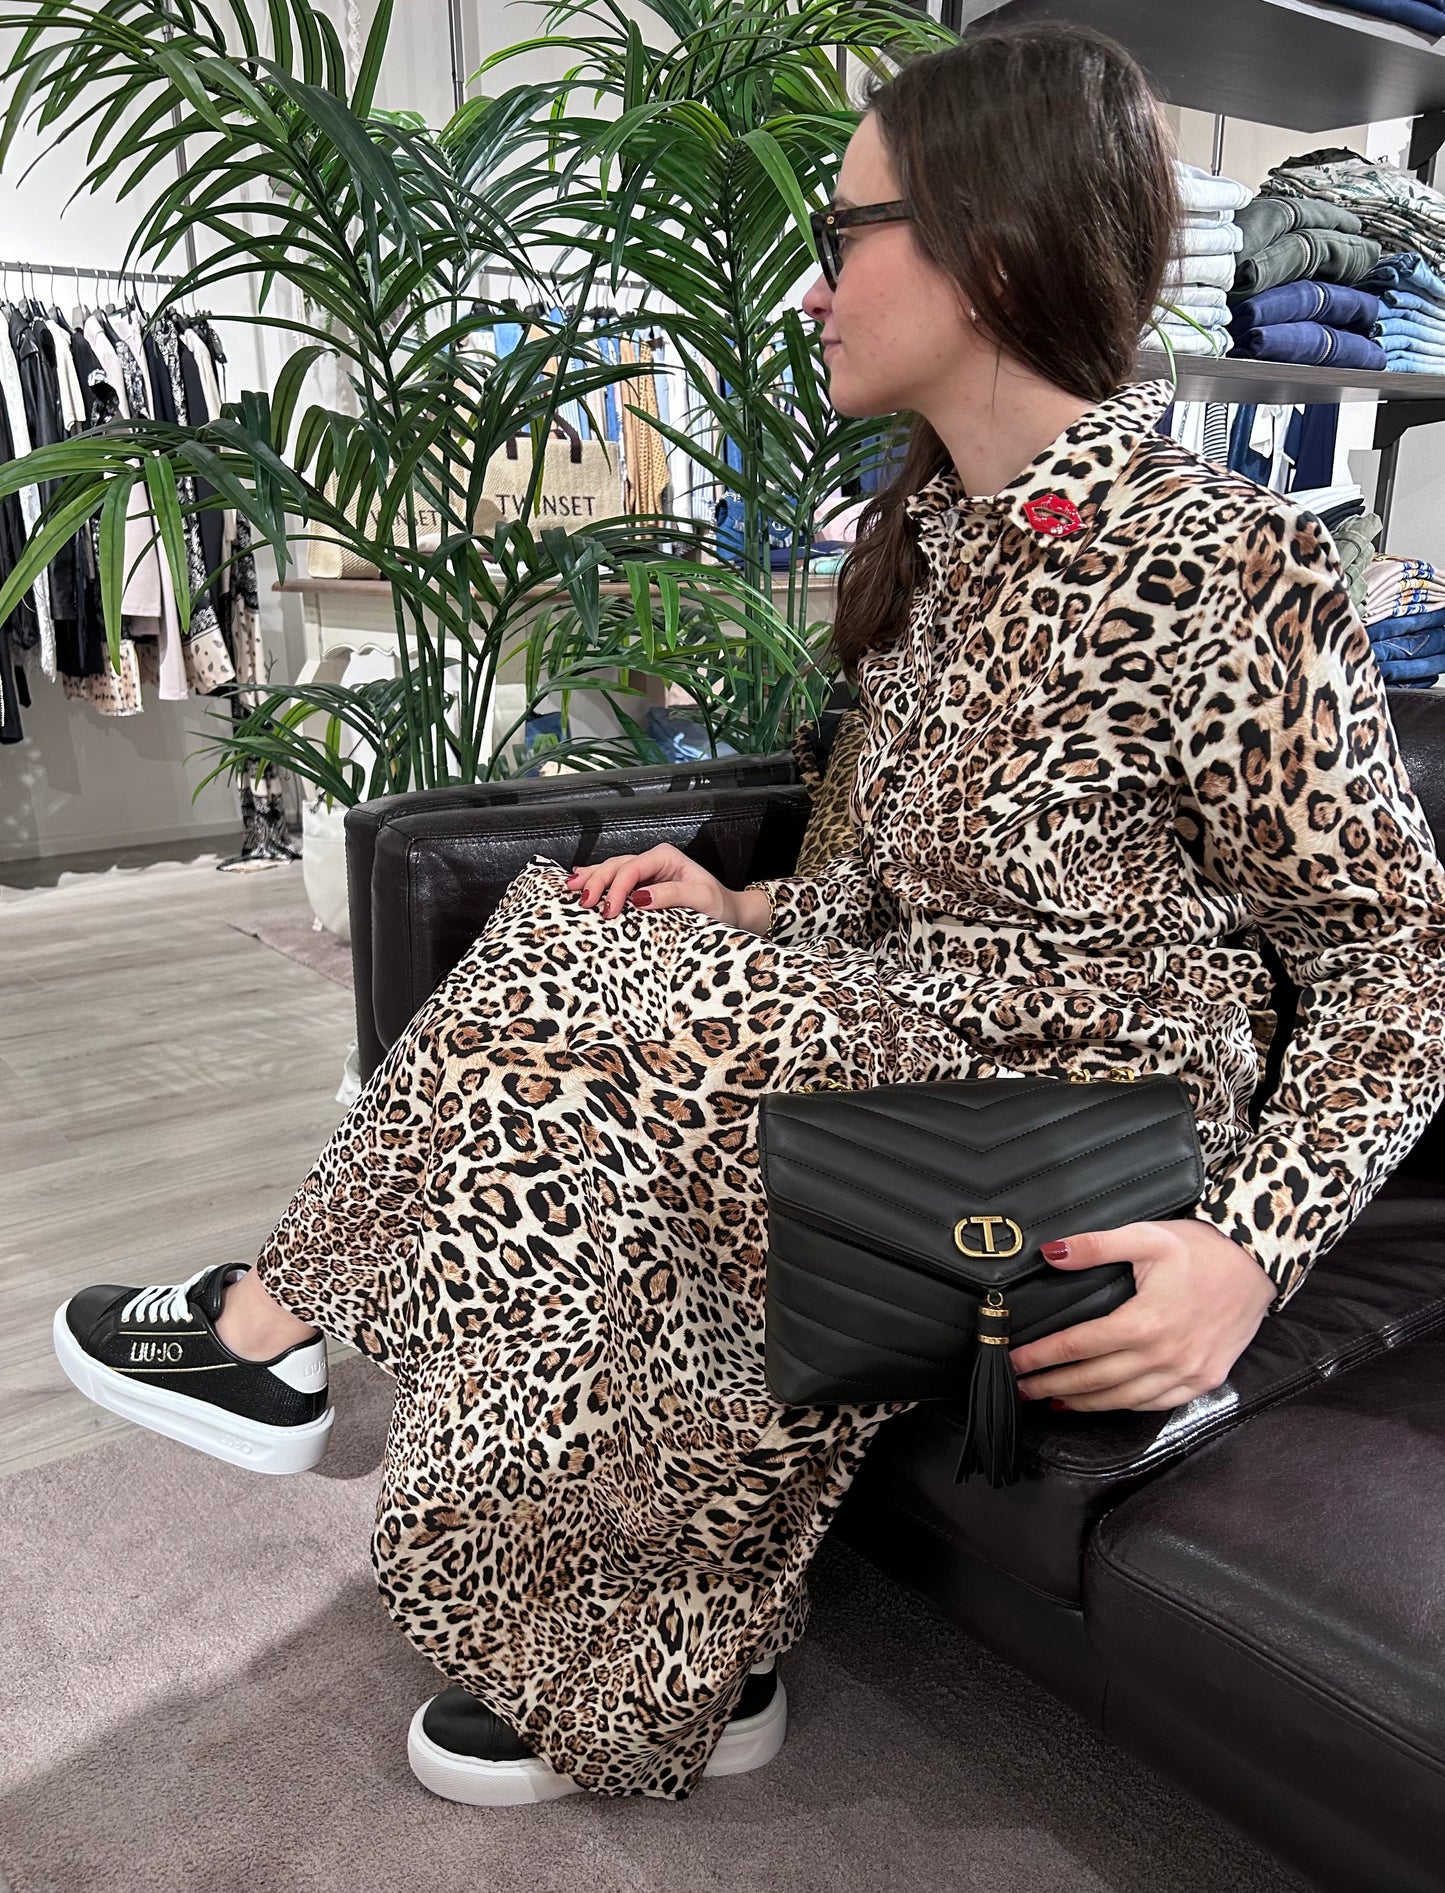 Vestito chemisier leopardato Tensione In